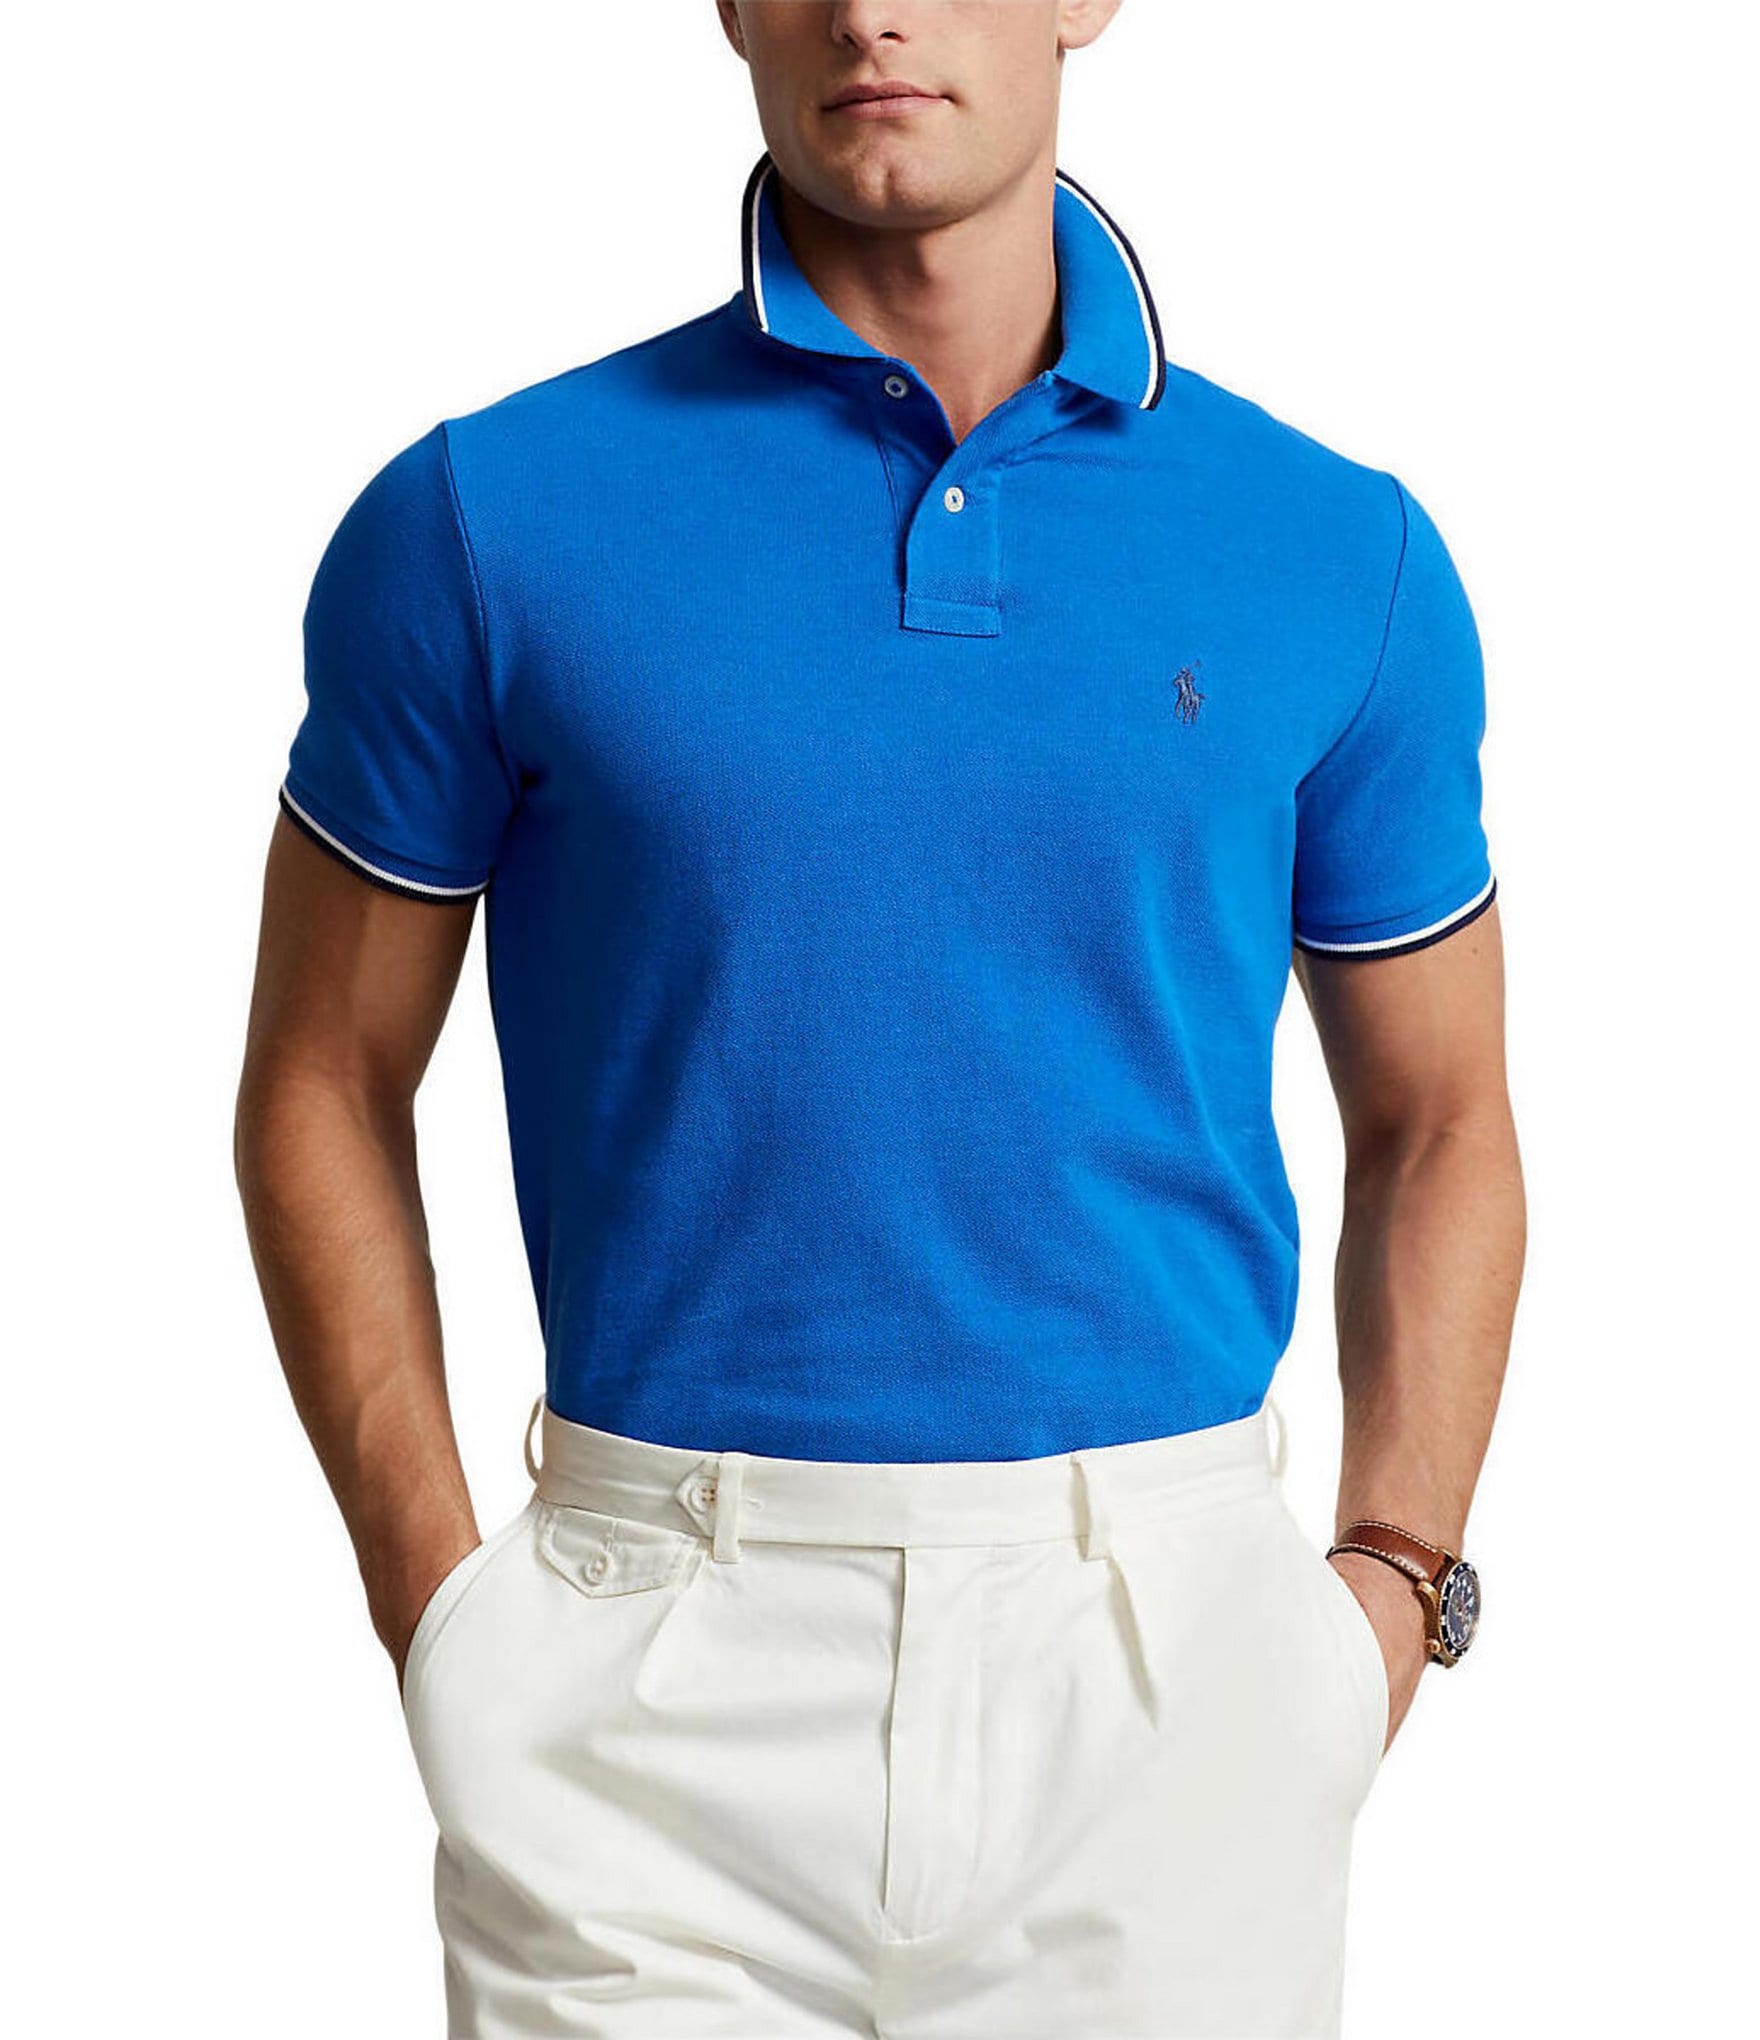 Polo Ralph Lauren Classic Fit Tipped Mesh Short Sleeve Polo Shirt